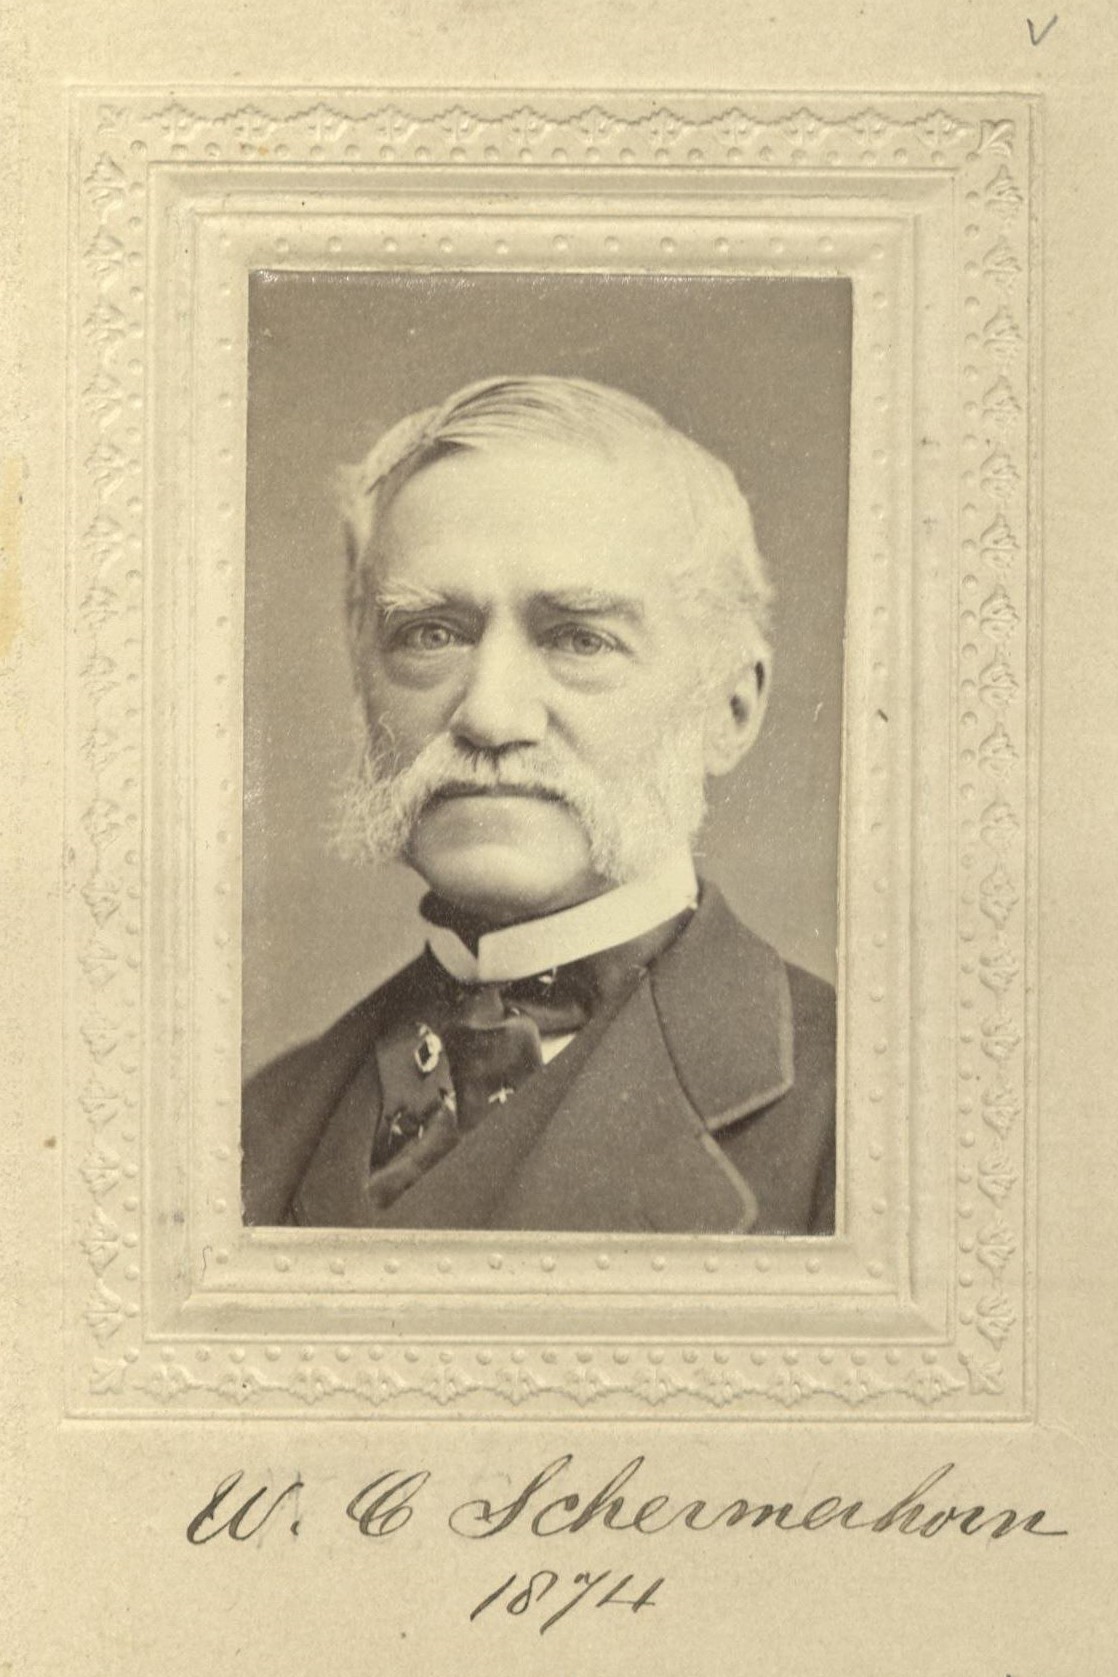 Member portrait of W. C. Schermerhorn